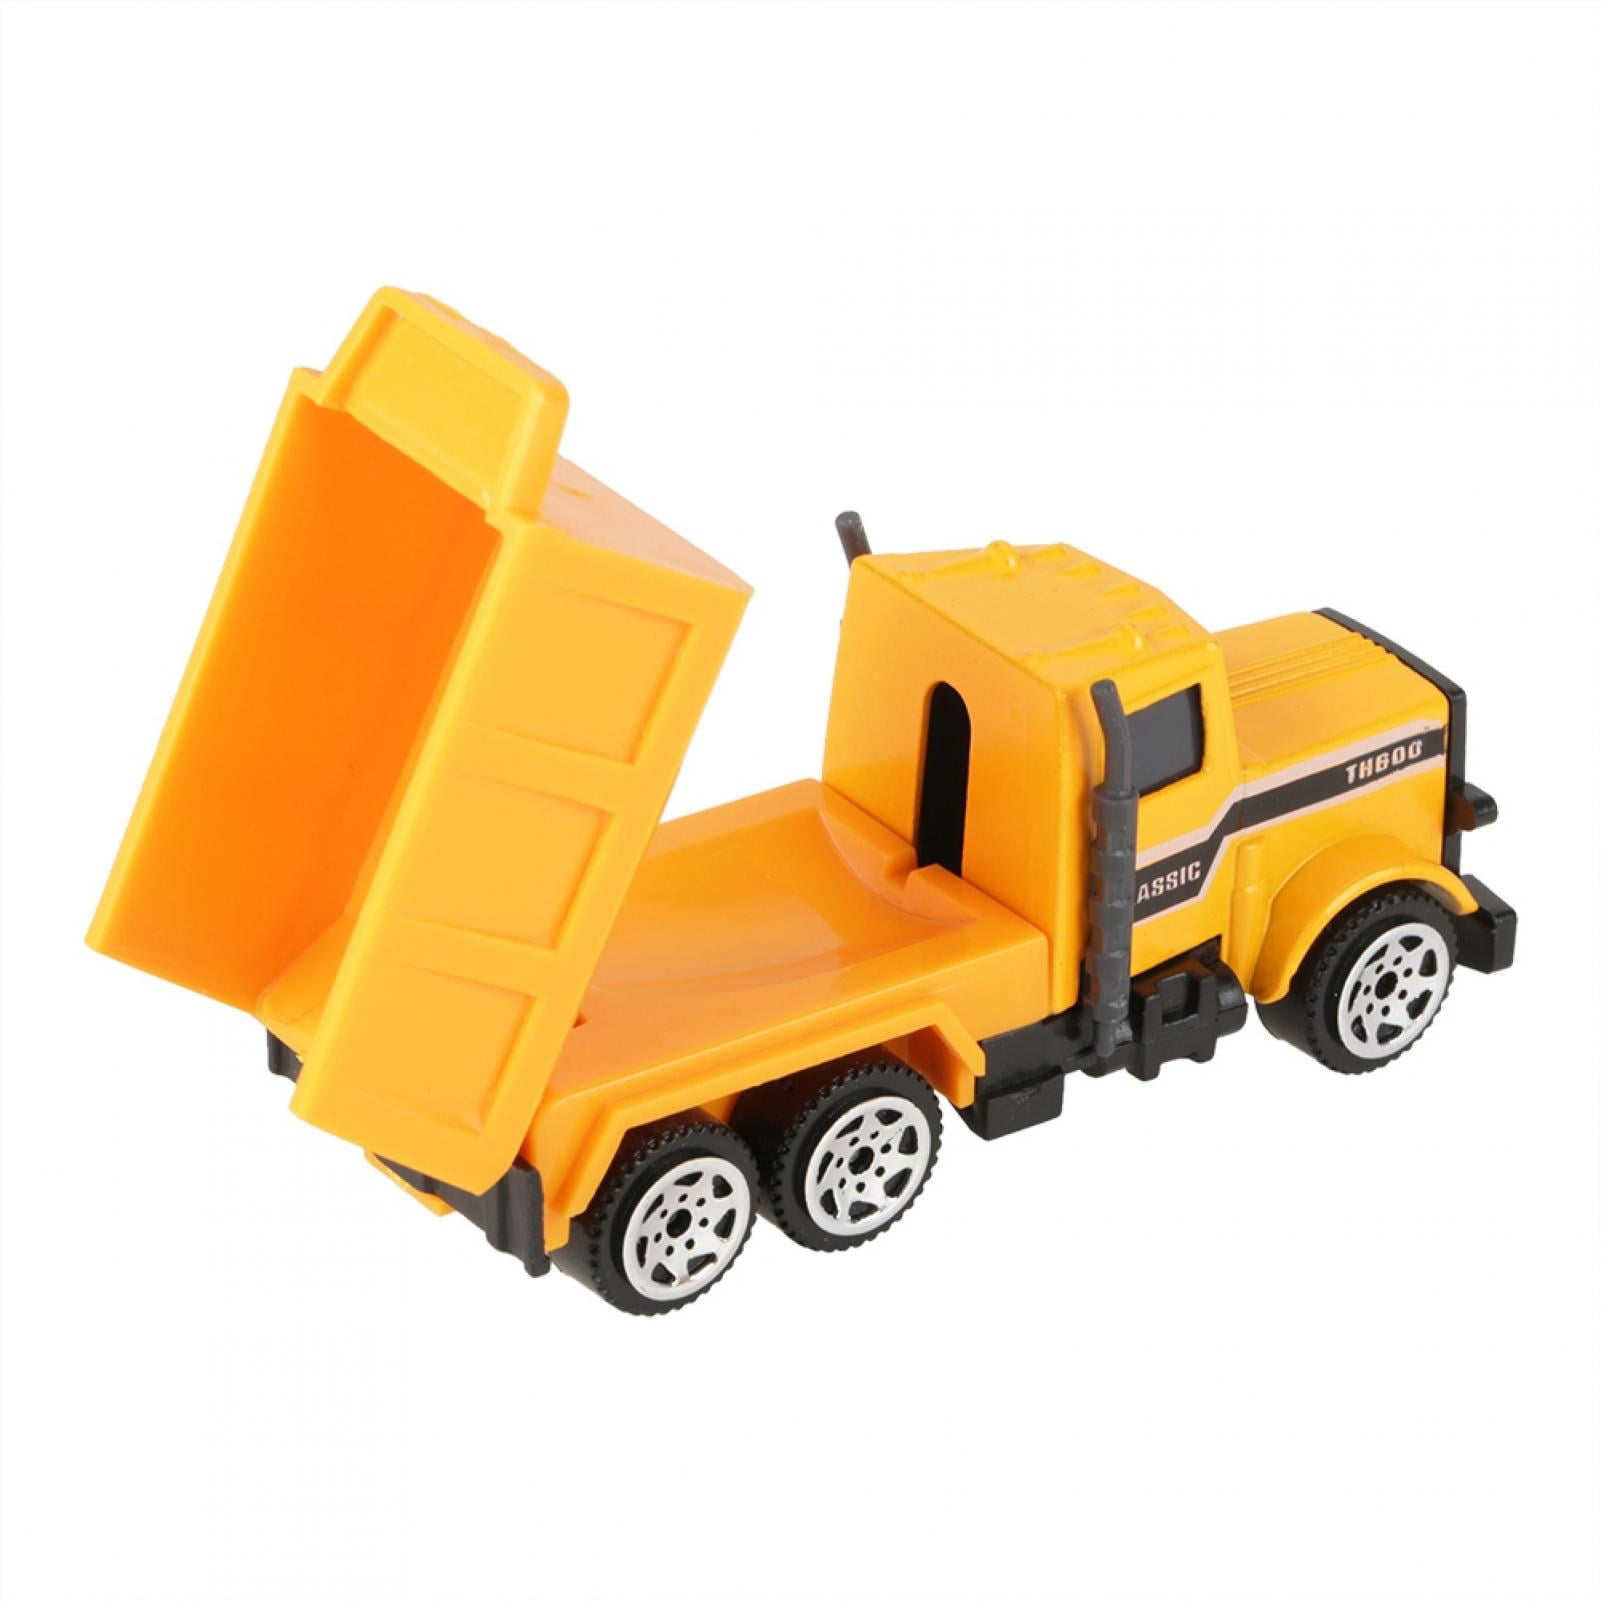 6pcs Plastic Mini Car Engineering Vehicle Set Kids Child Educational Toy Gift 